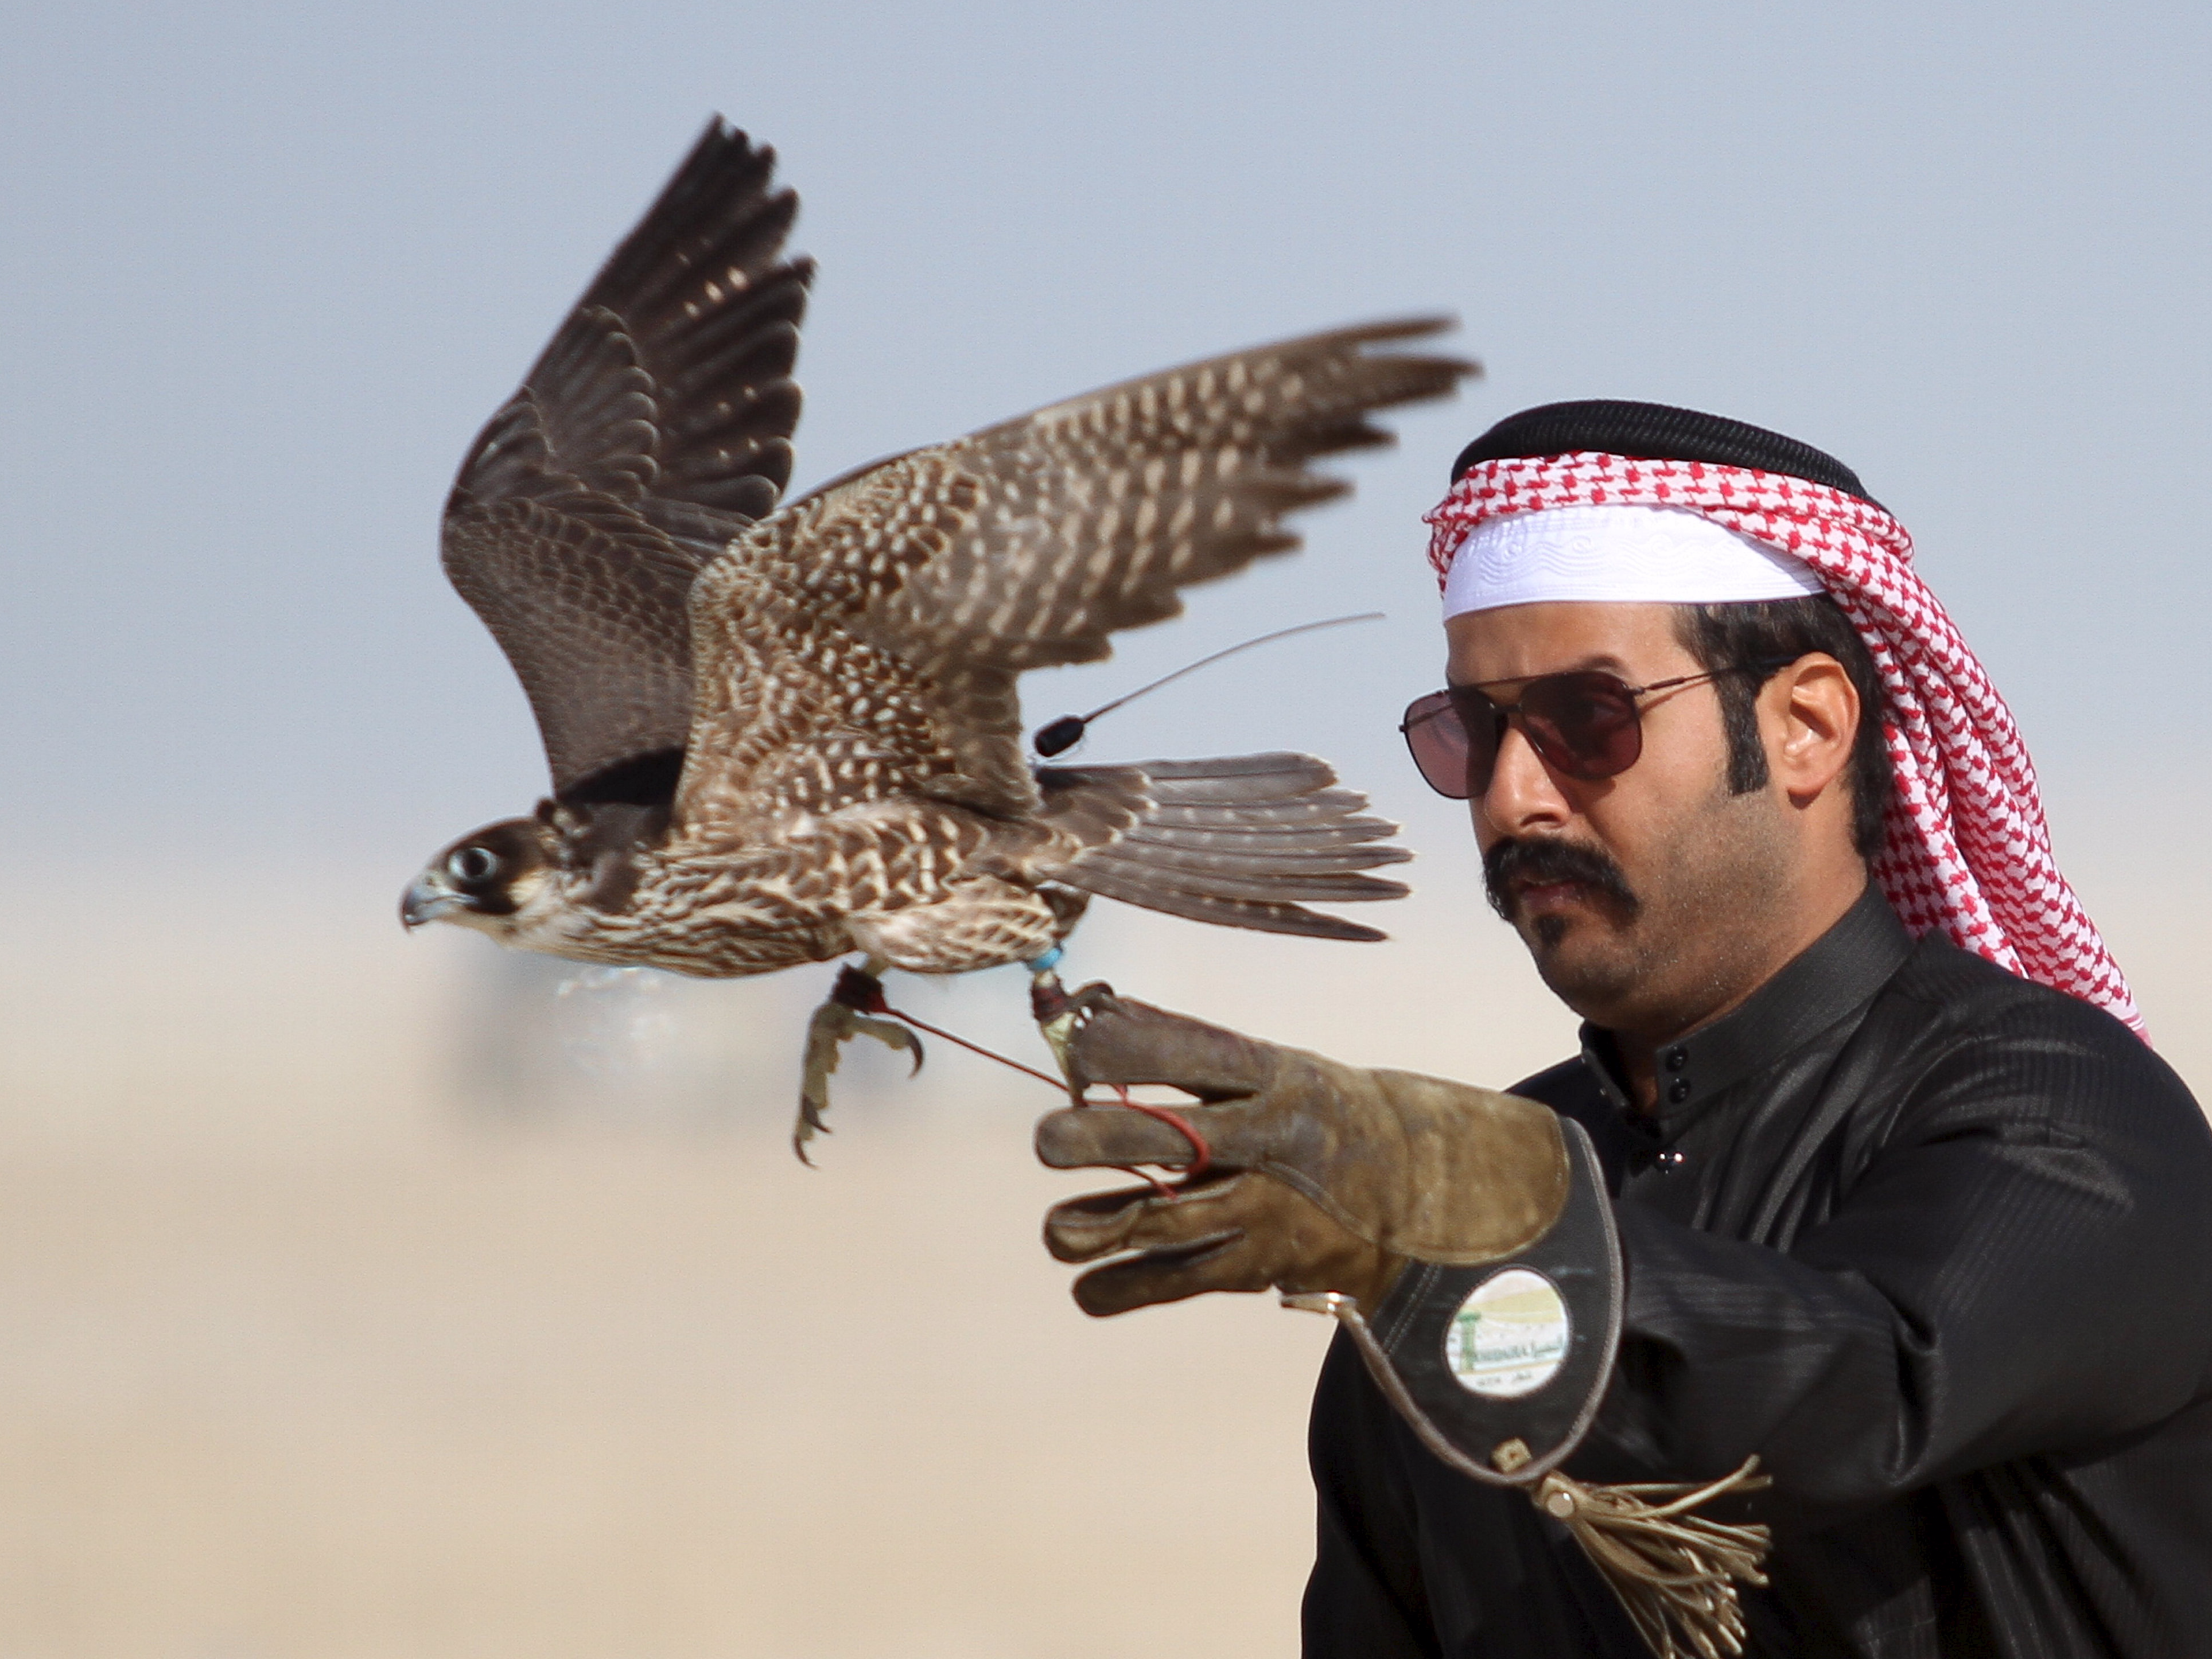 Qatar, gijzeling, koninklijke familie, valkenjacht